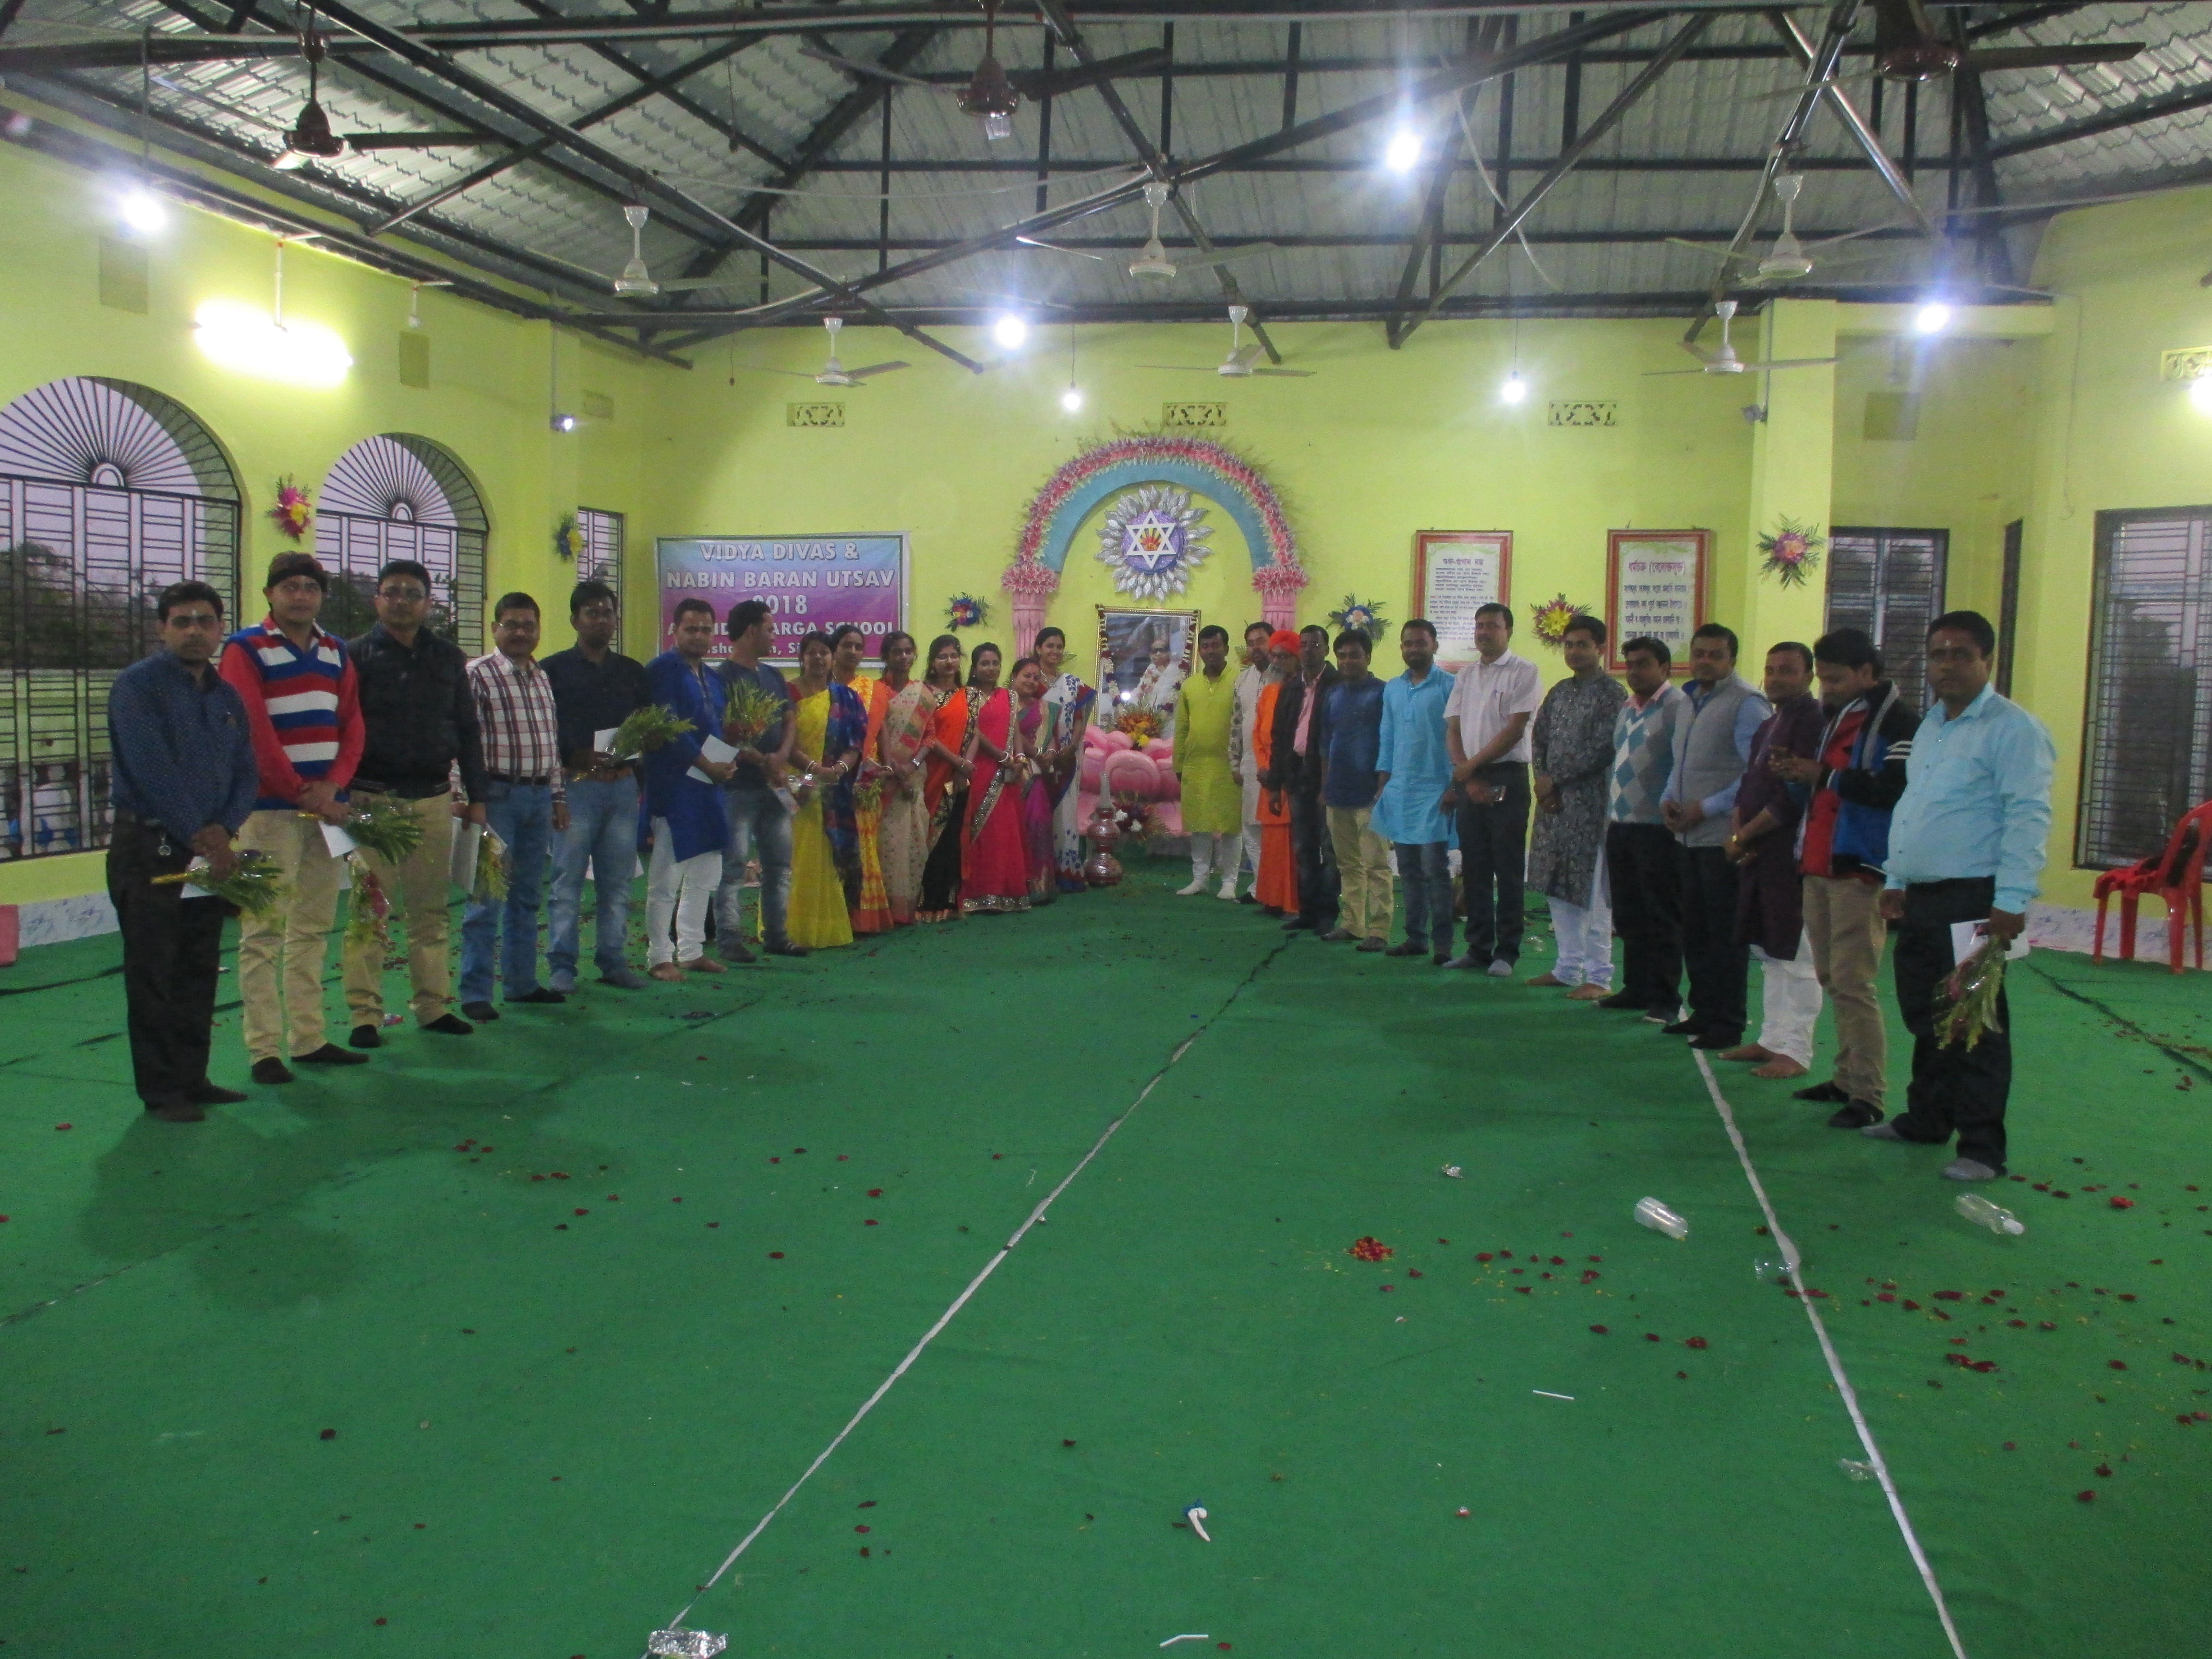 VIDYA DIVAS - Anandamarga School Bishalghar